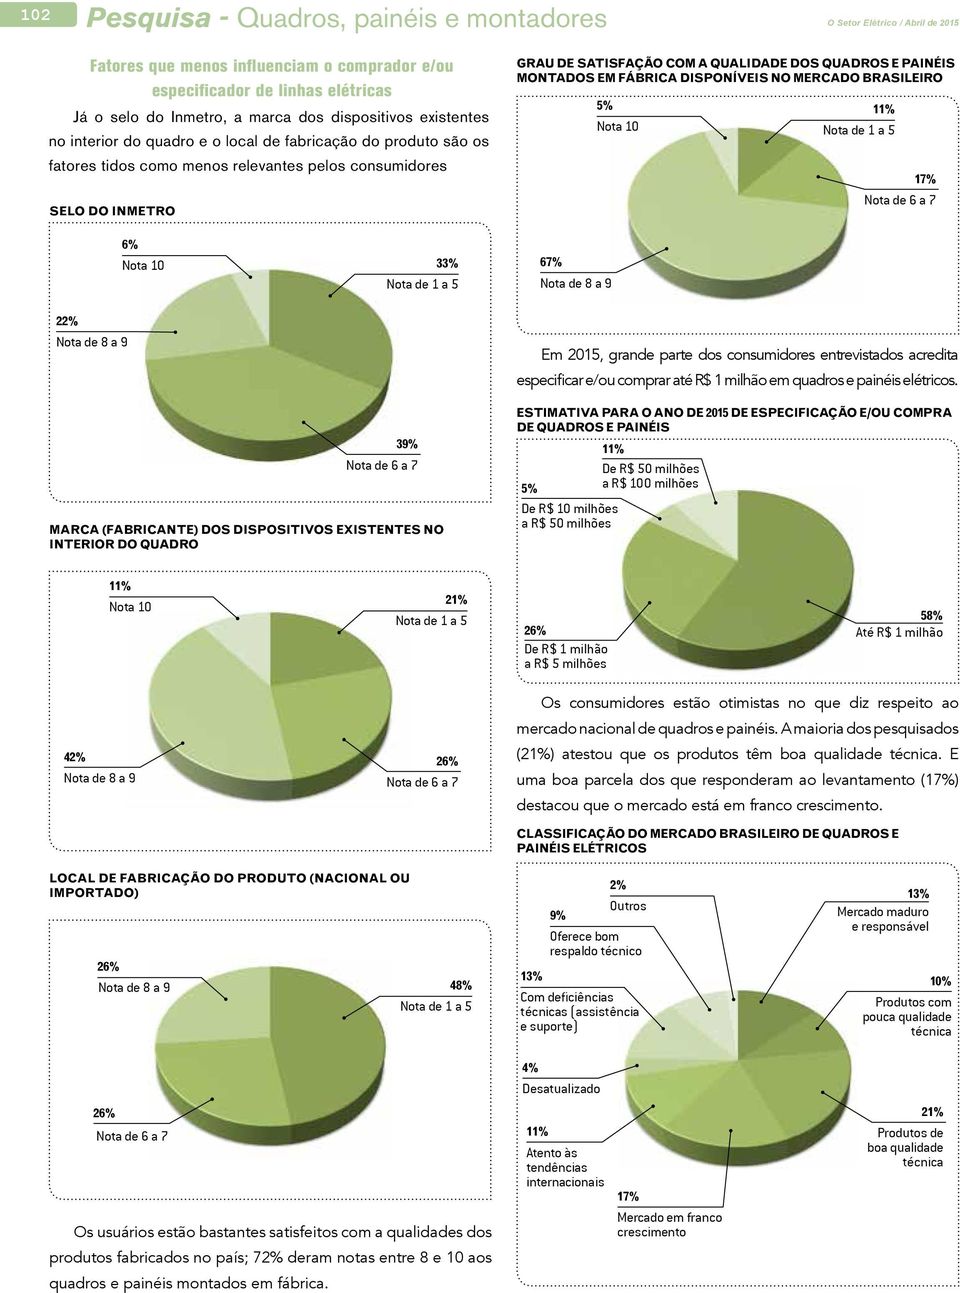 disponíveis no mercado brasileiro 5% Nota 10 11% Nota de 1 a 5 17% Nota de 6 a 7 6% Nota 10 33% Nota de 1 a 5 67% Nota de 8 a 9 22% Nota de 8 a 9 Em 2015, grande parte dos consumidores entrevistados